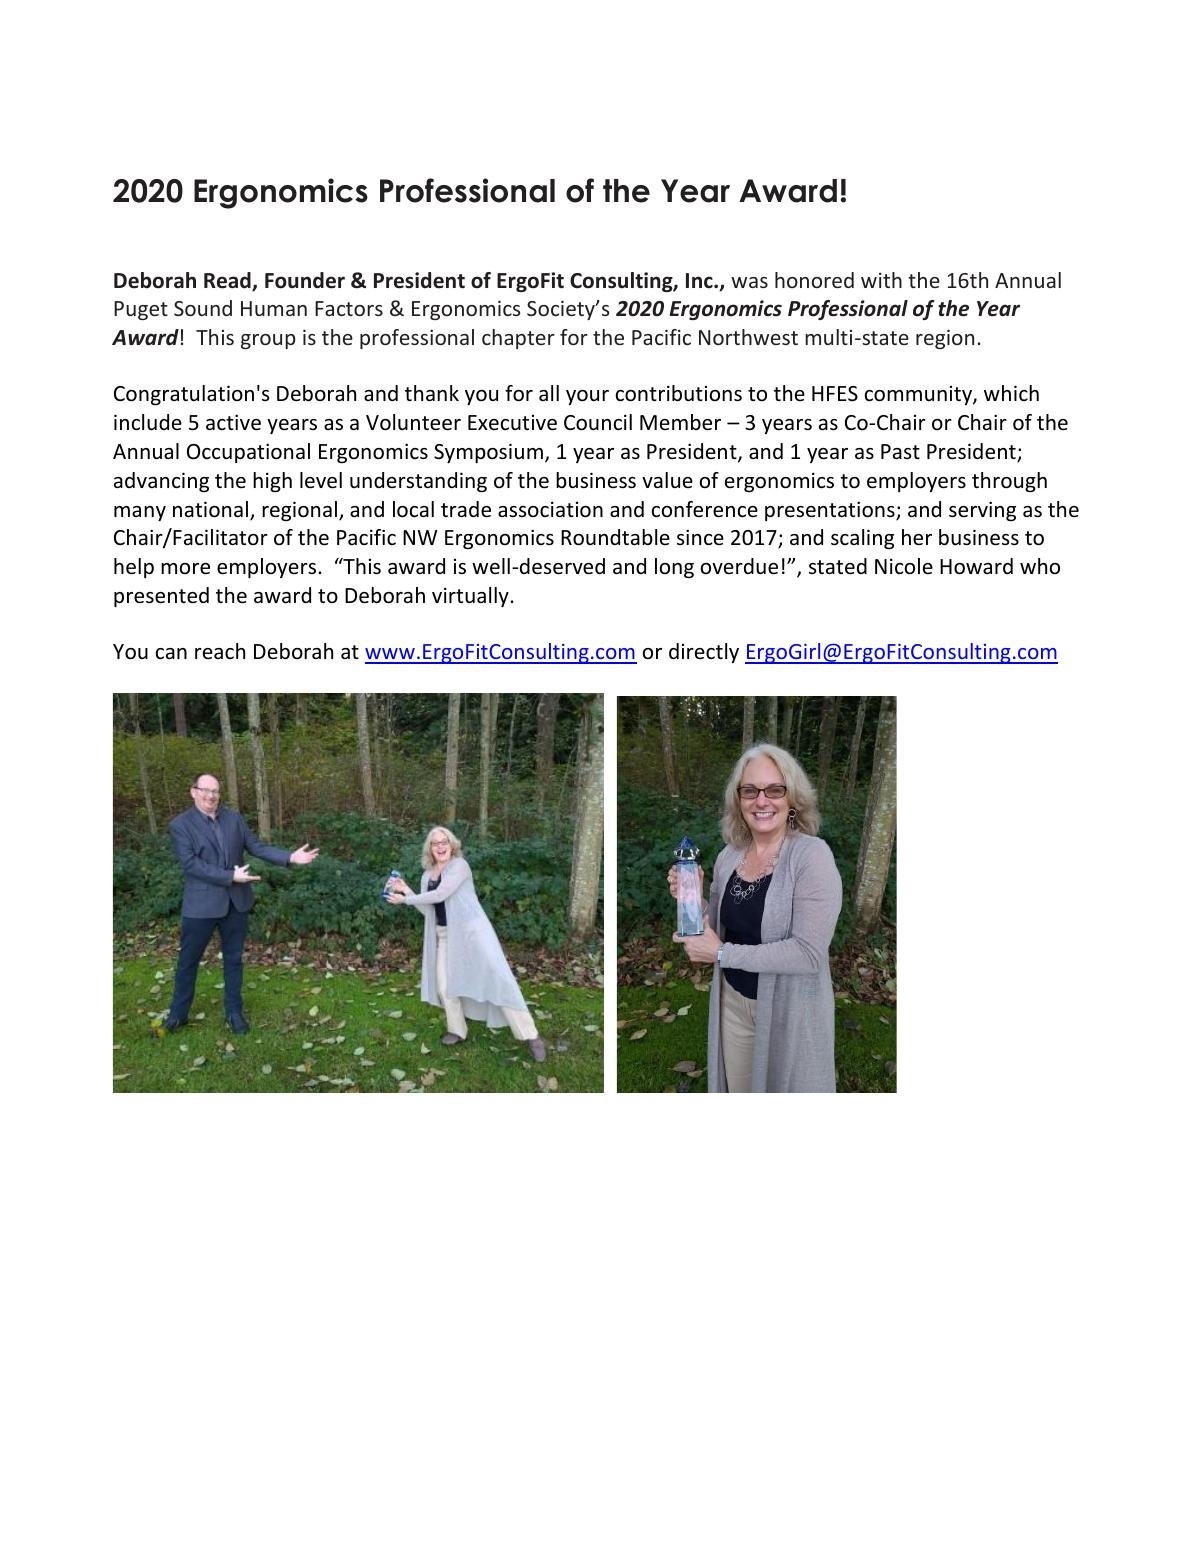 Deborah Read receives 2020 Ergonomics Professional of the Year Award